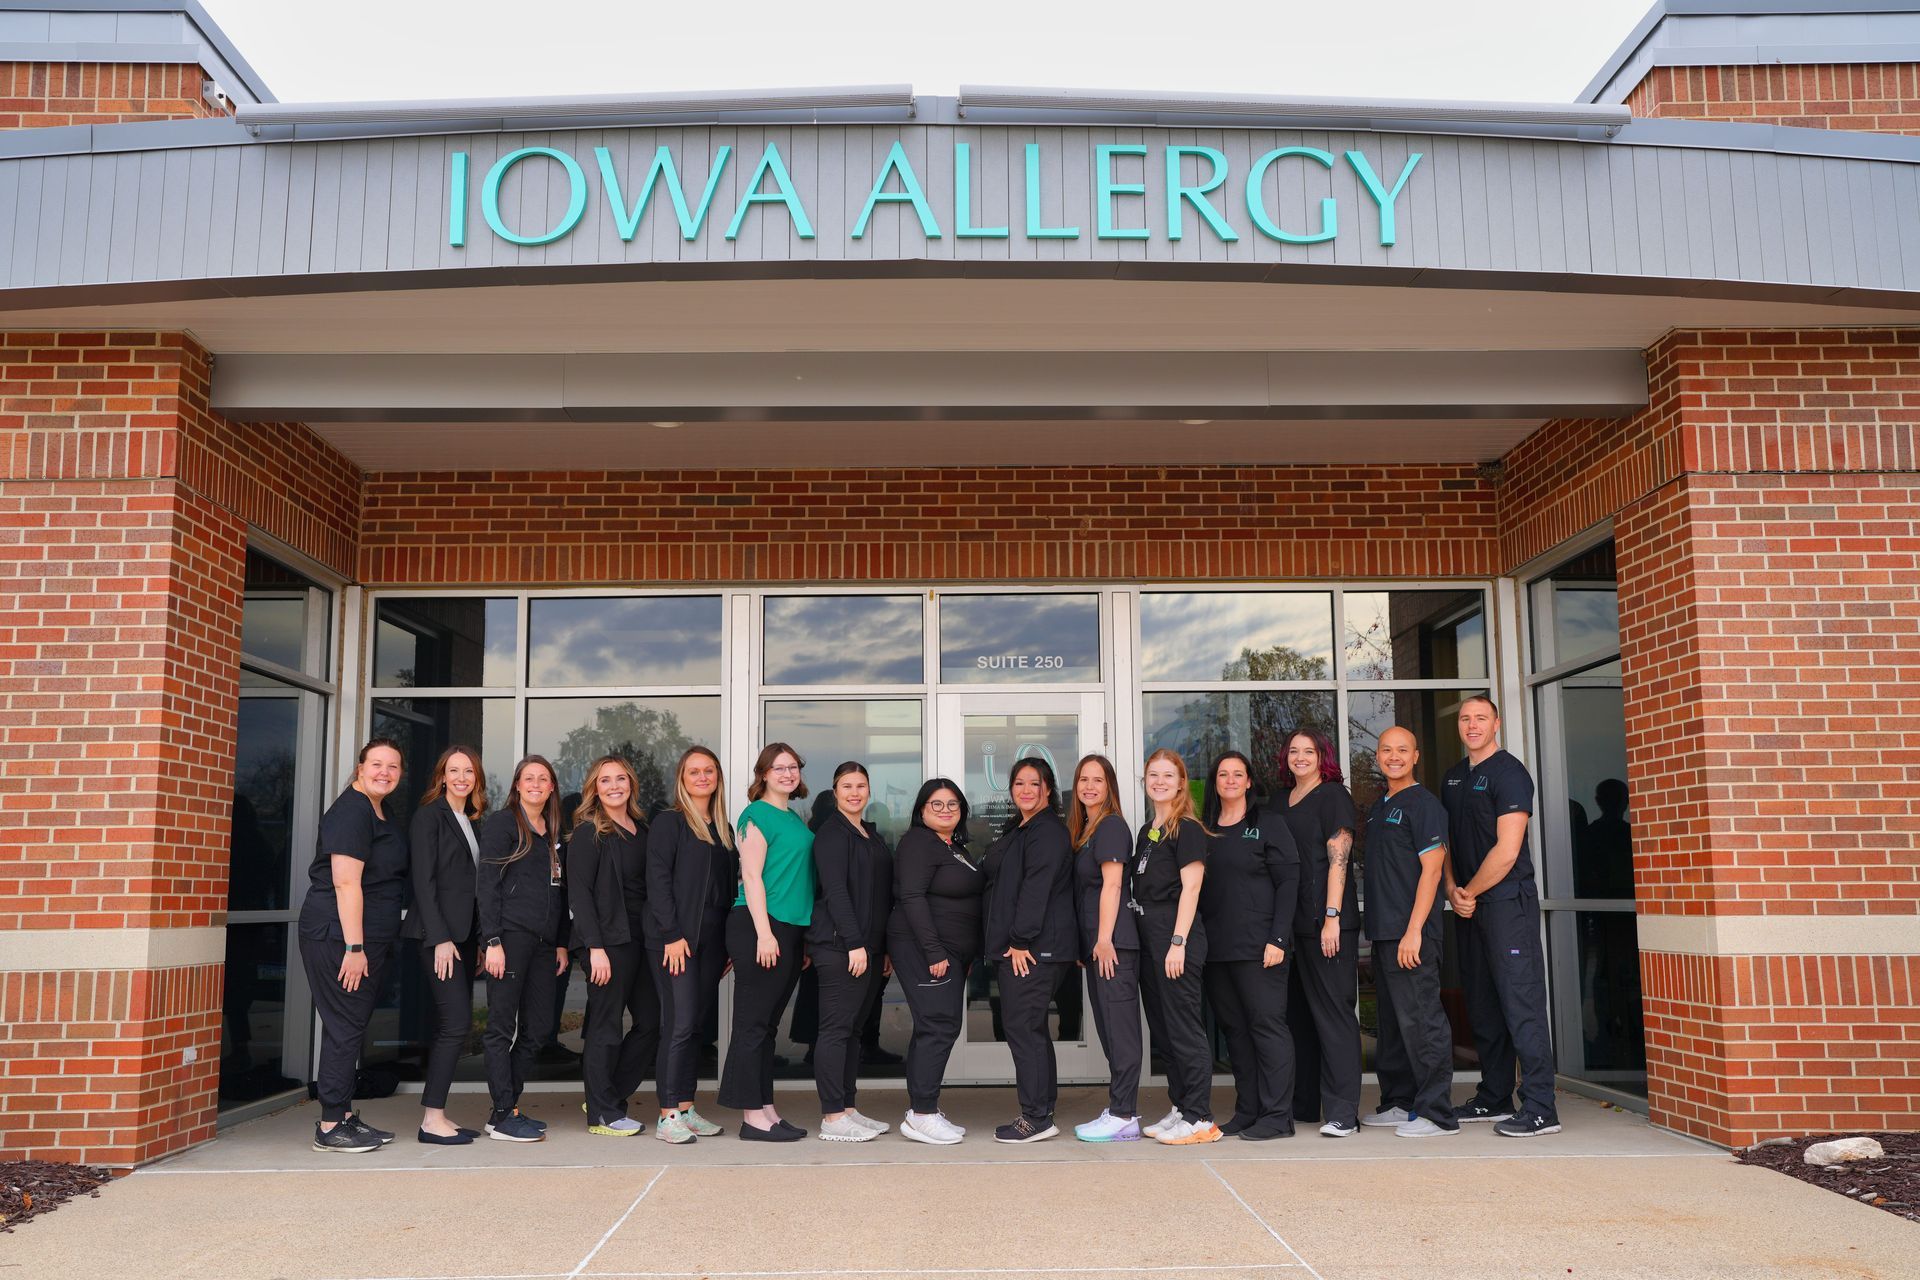 The Iowa Allergy Team